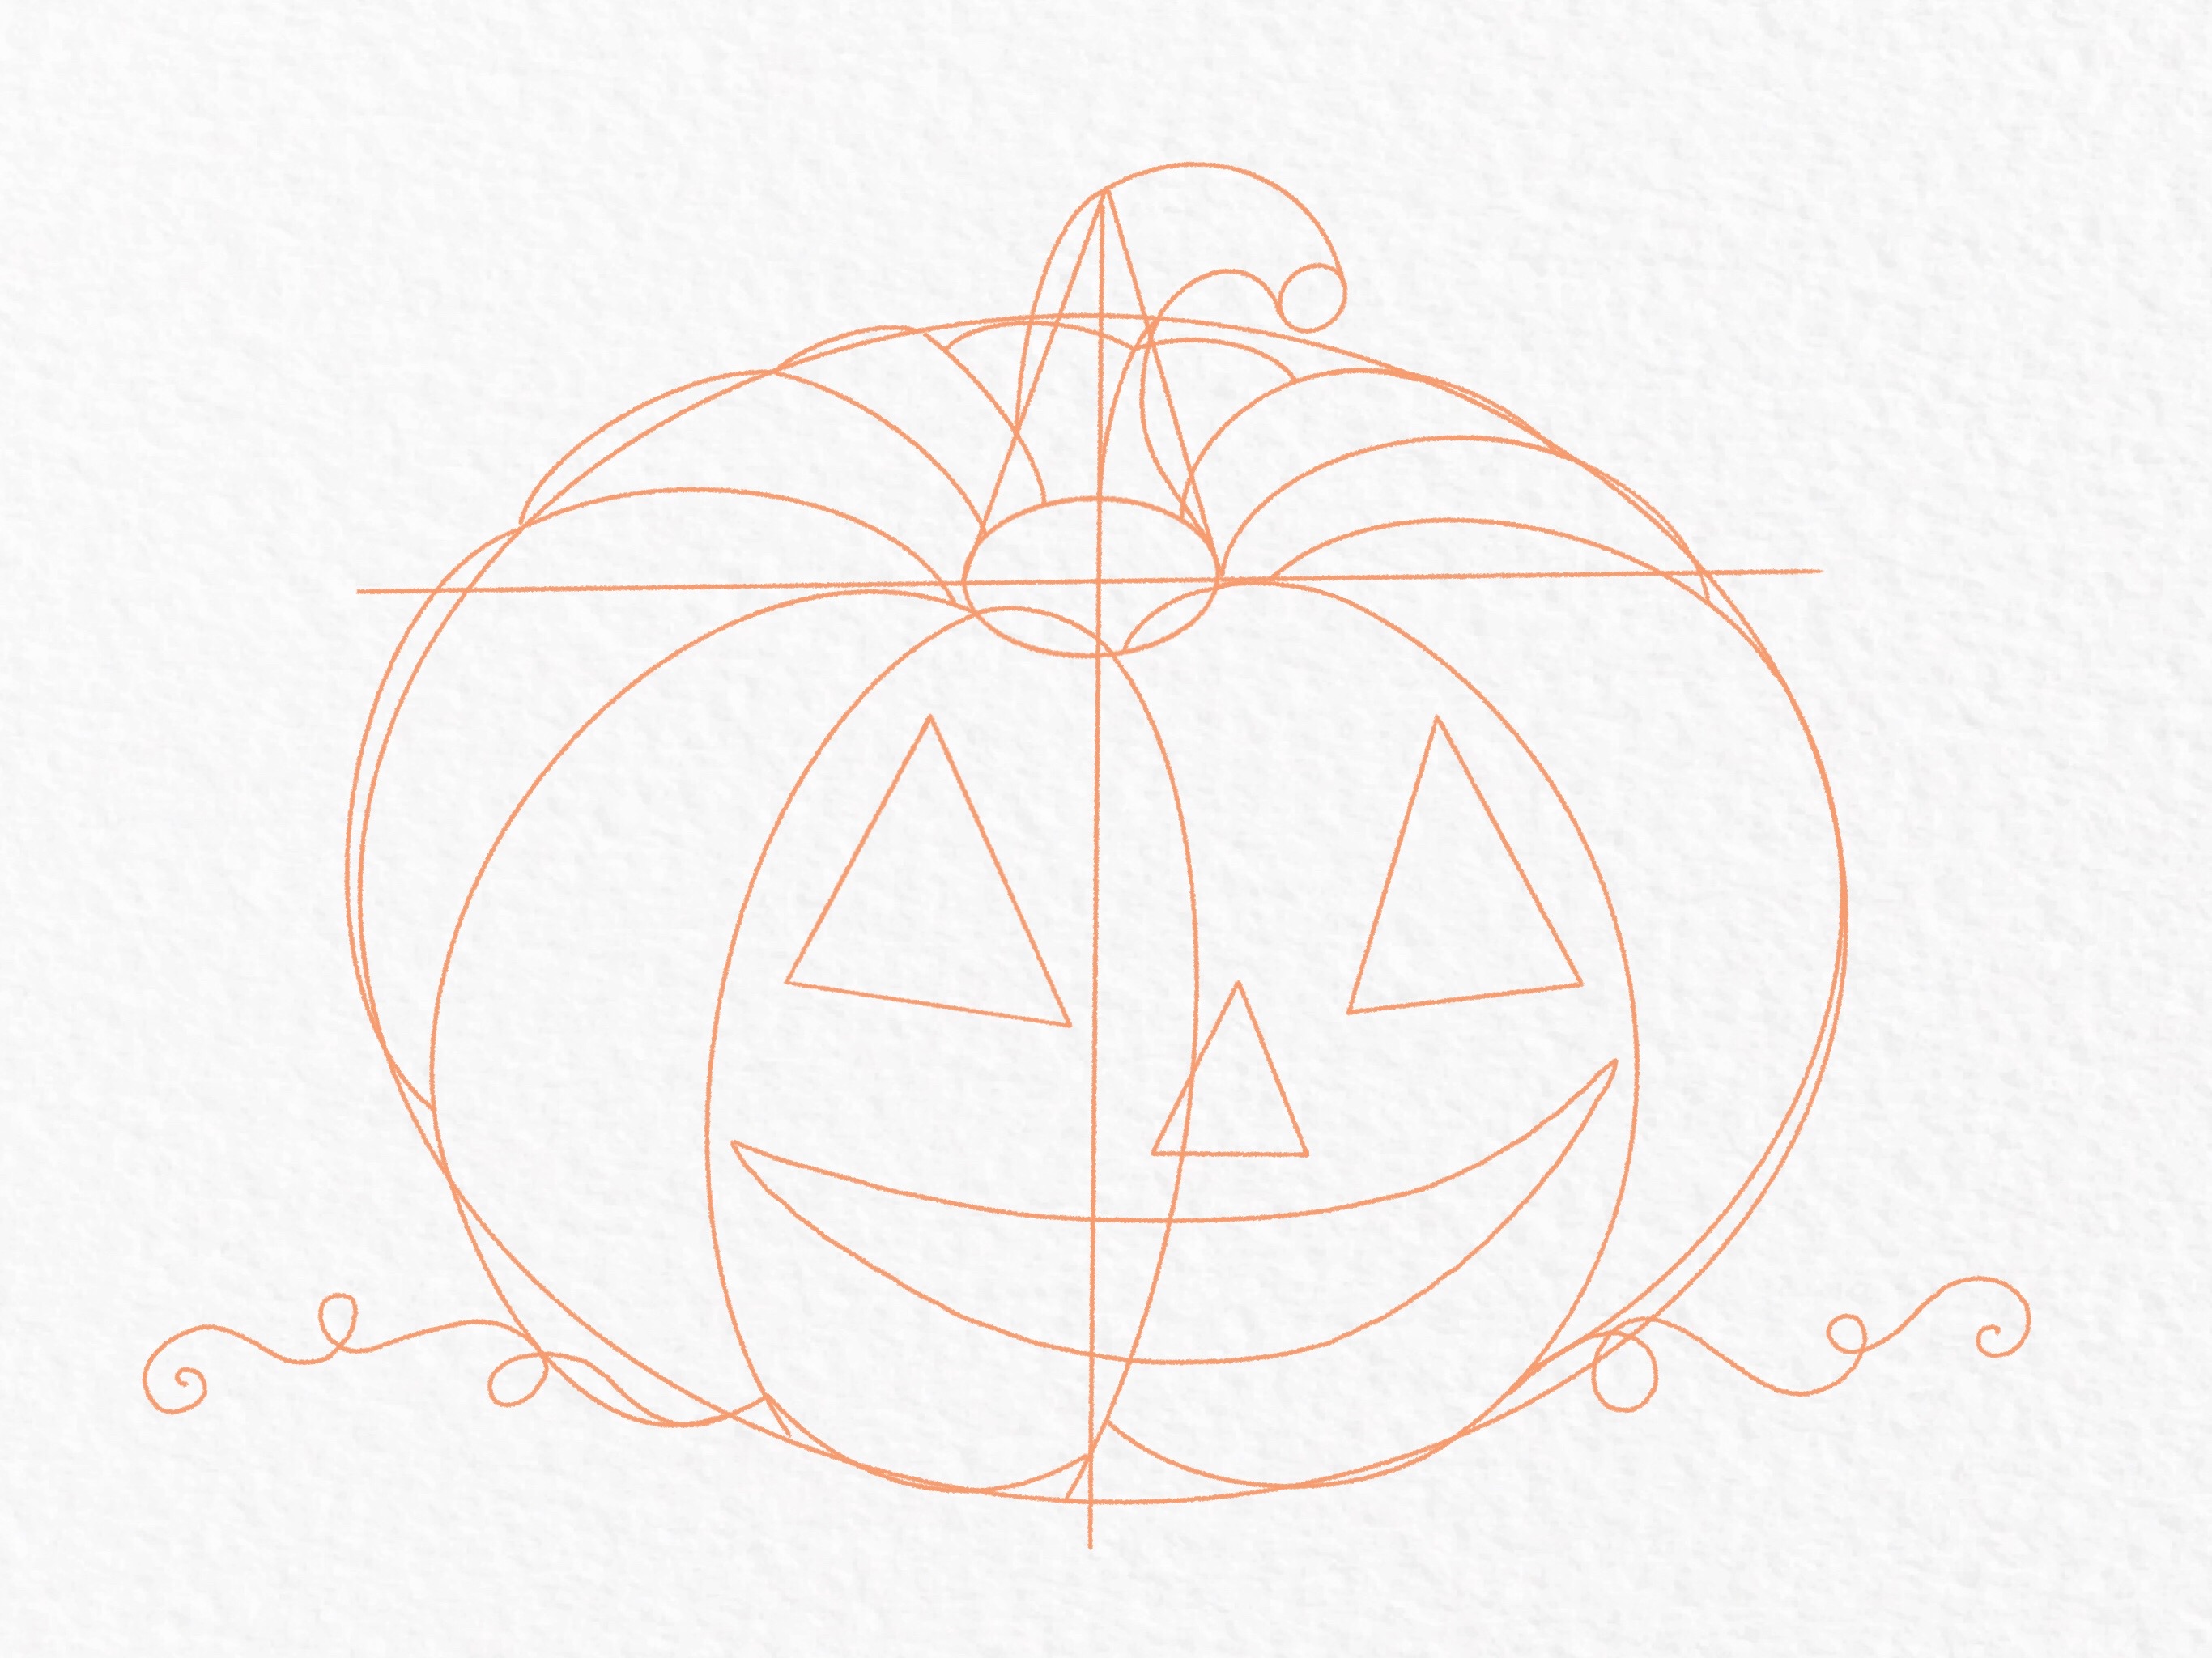 scary pumpkin drawing